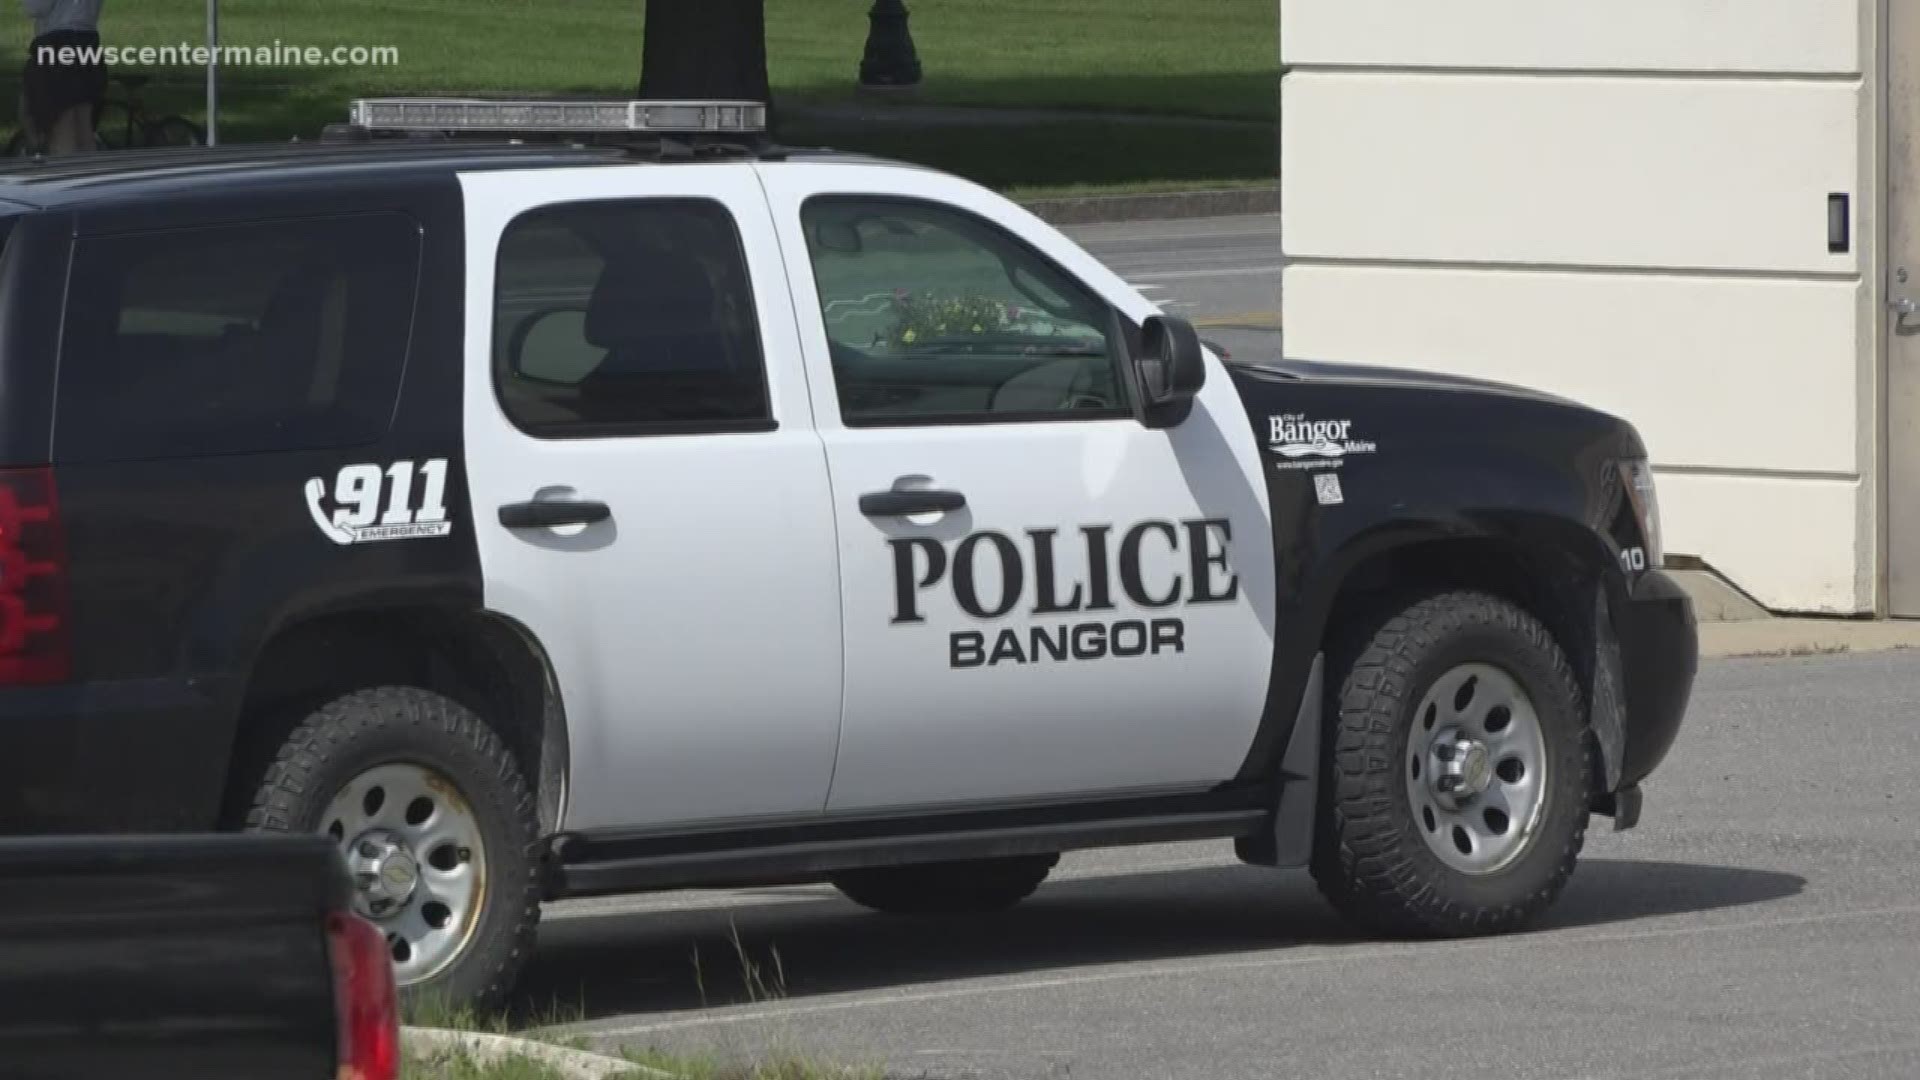 Bangor police look to curb non-emergency calls